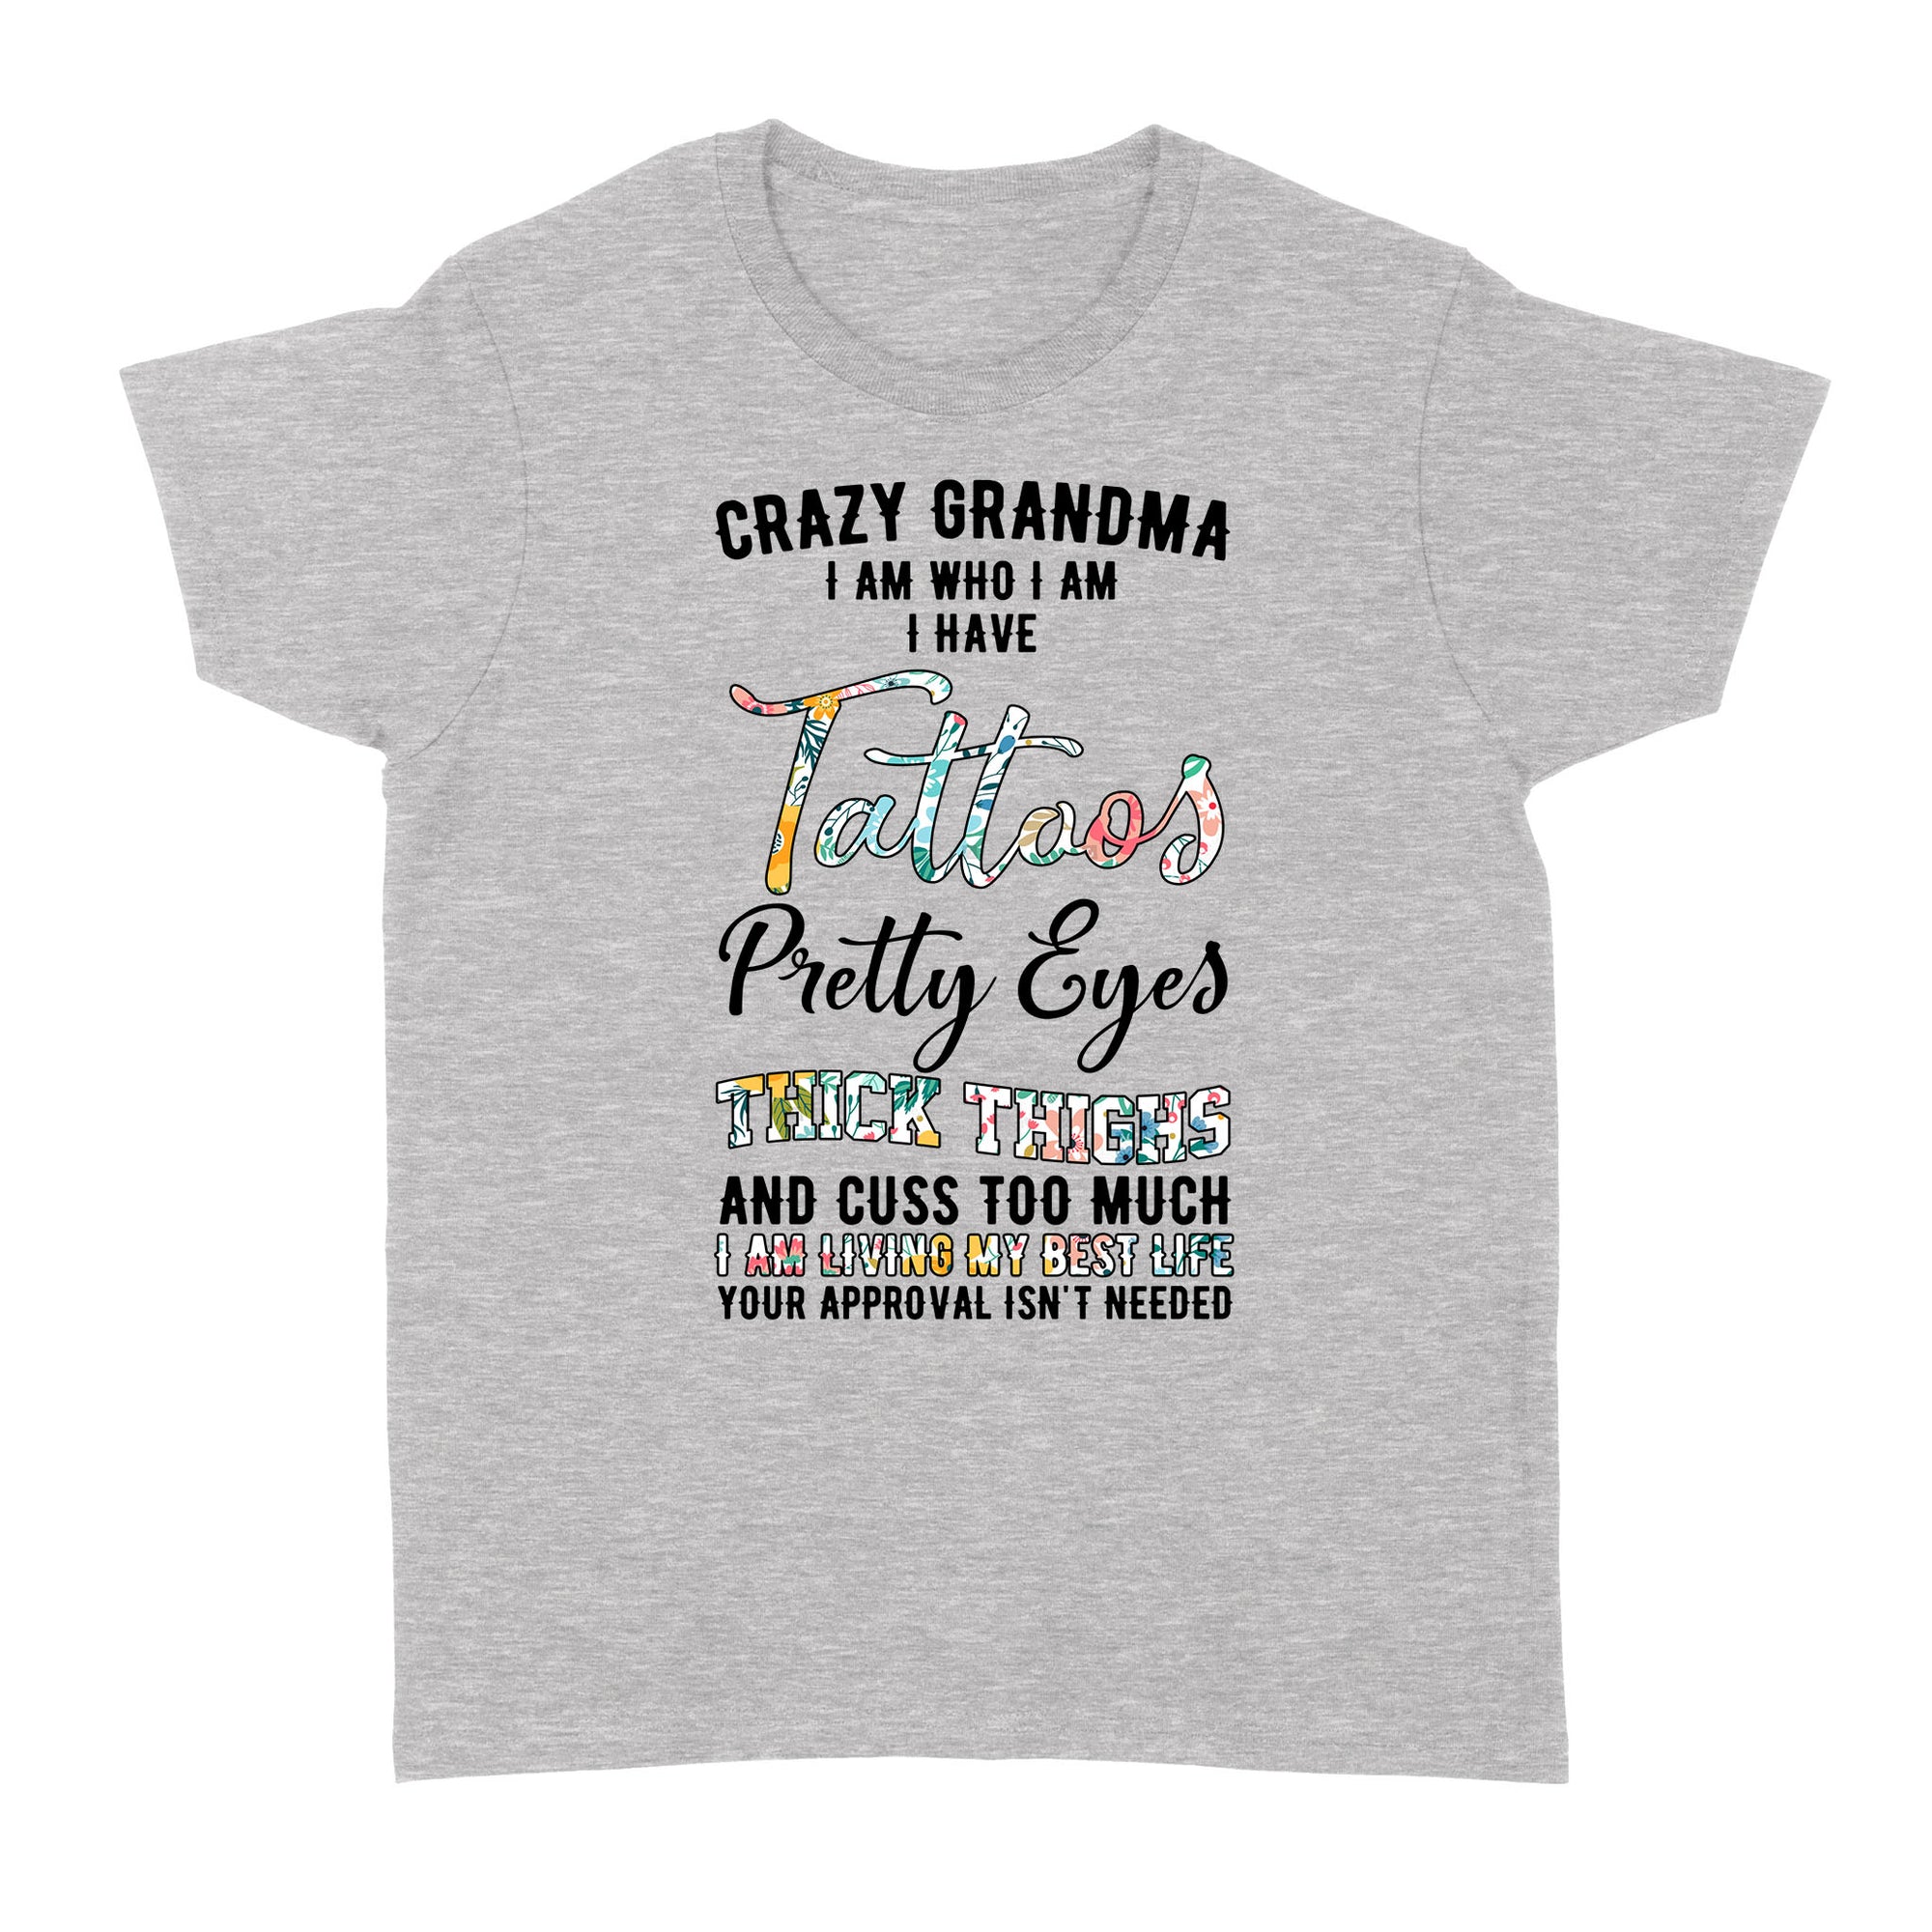 Crazy Grandma I Am Who I Am I Have Tattoos Pretty Eyes Living My Best Life - Standard Women's T-shirt